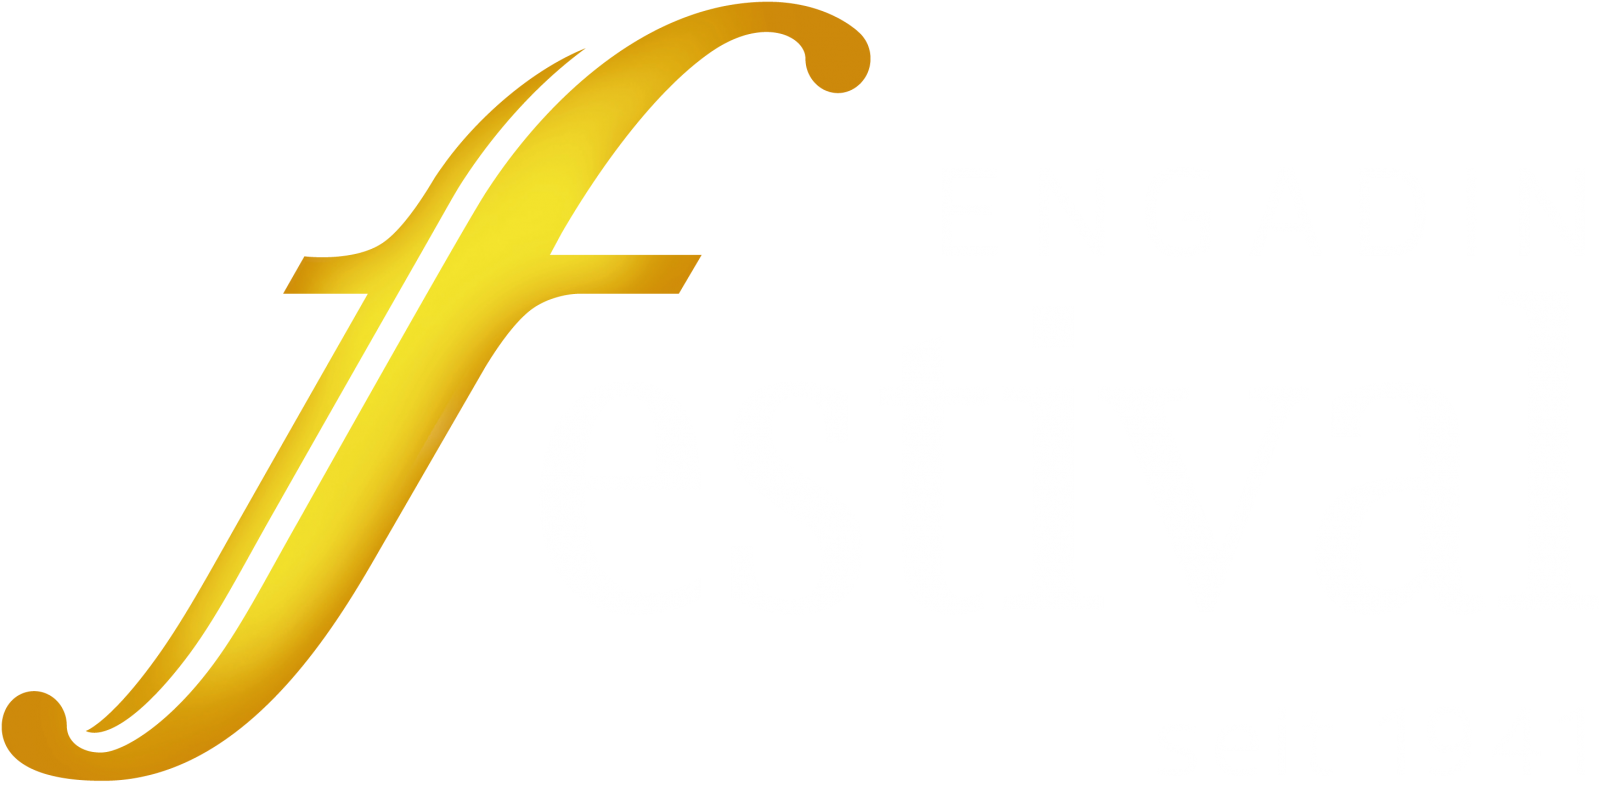 Engadin Festival